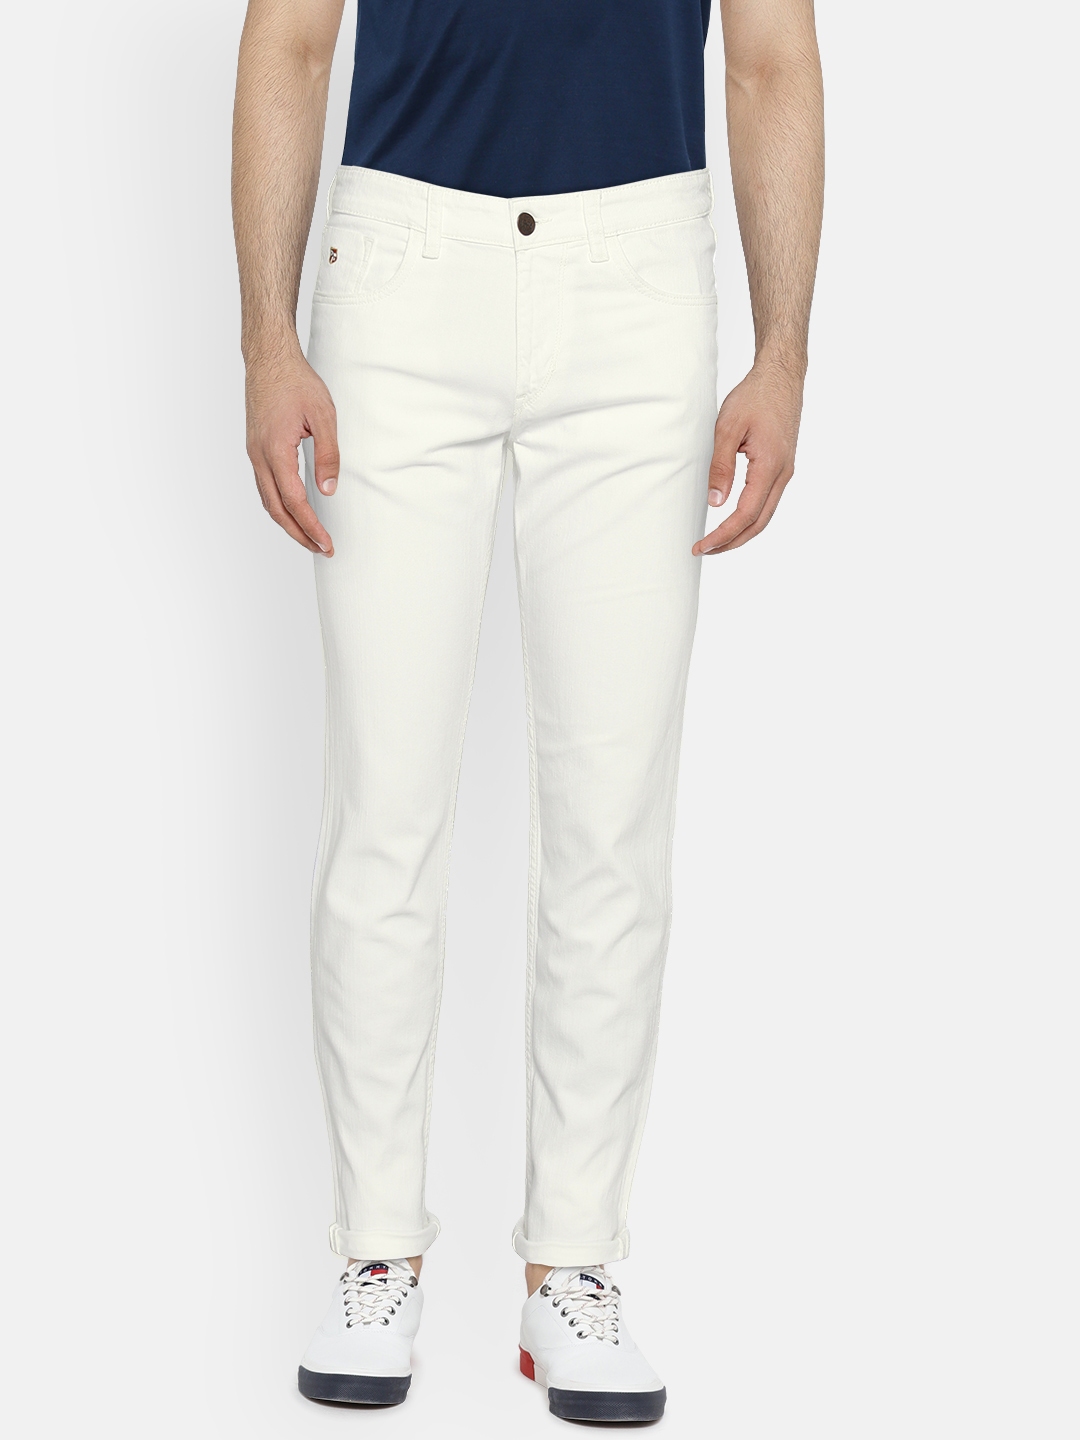 polo white jeans mens